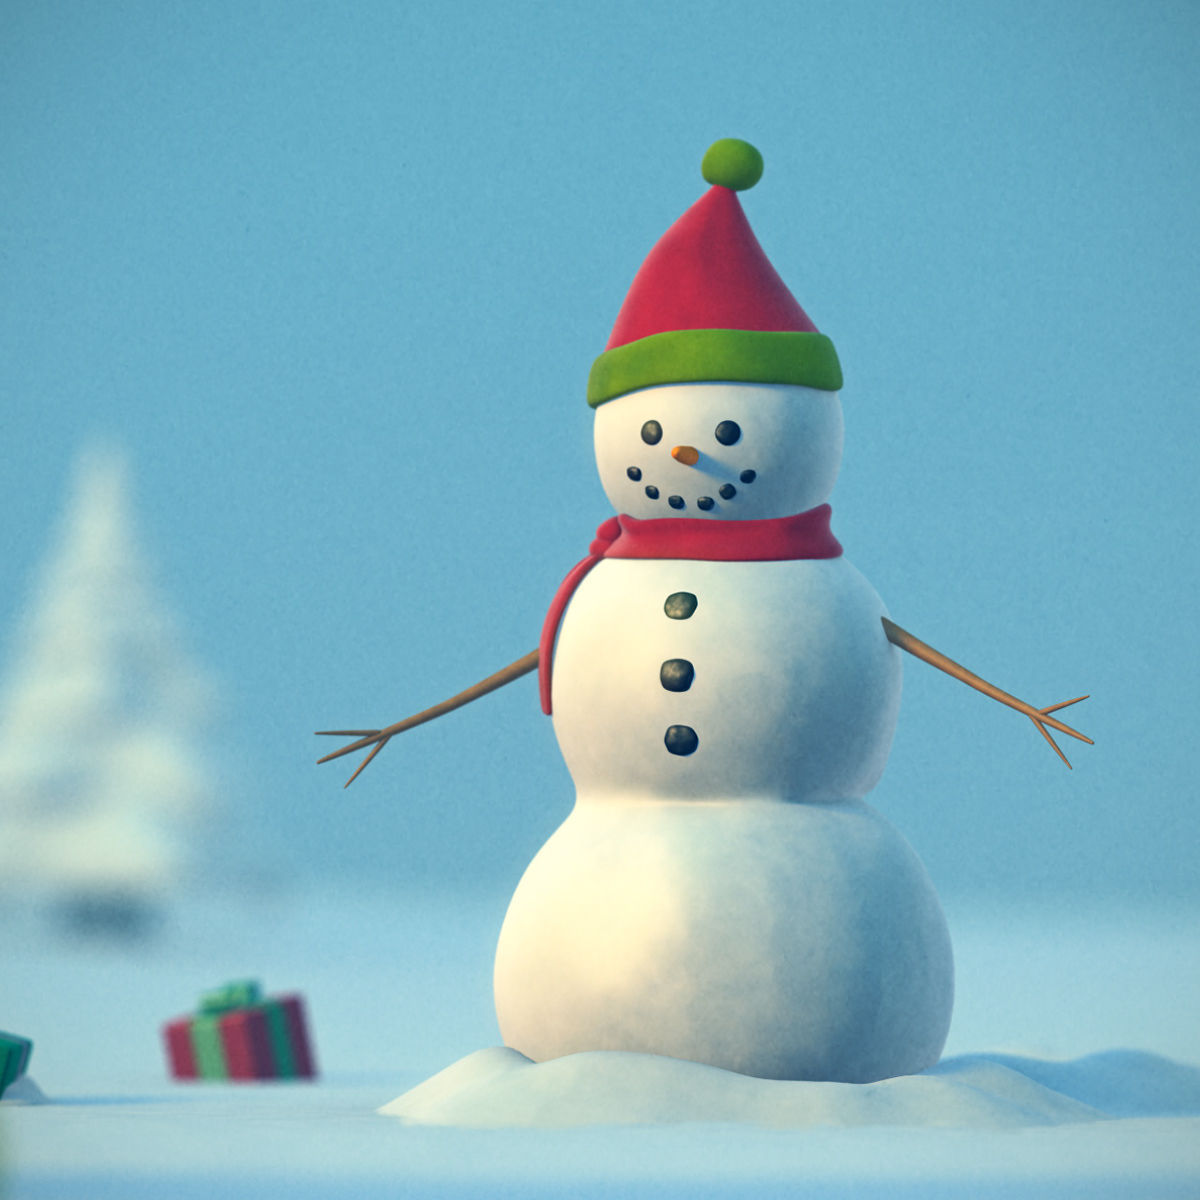 Christmas snow winter snowman animated CGI CG 3D 3d animation toy Holiday